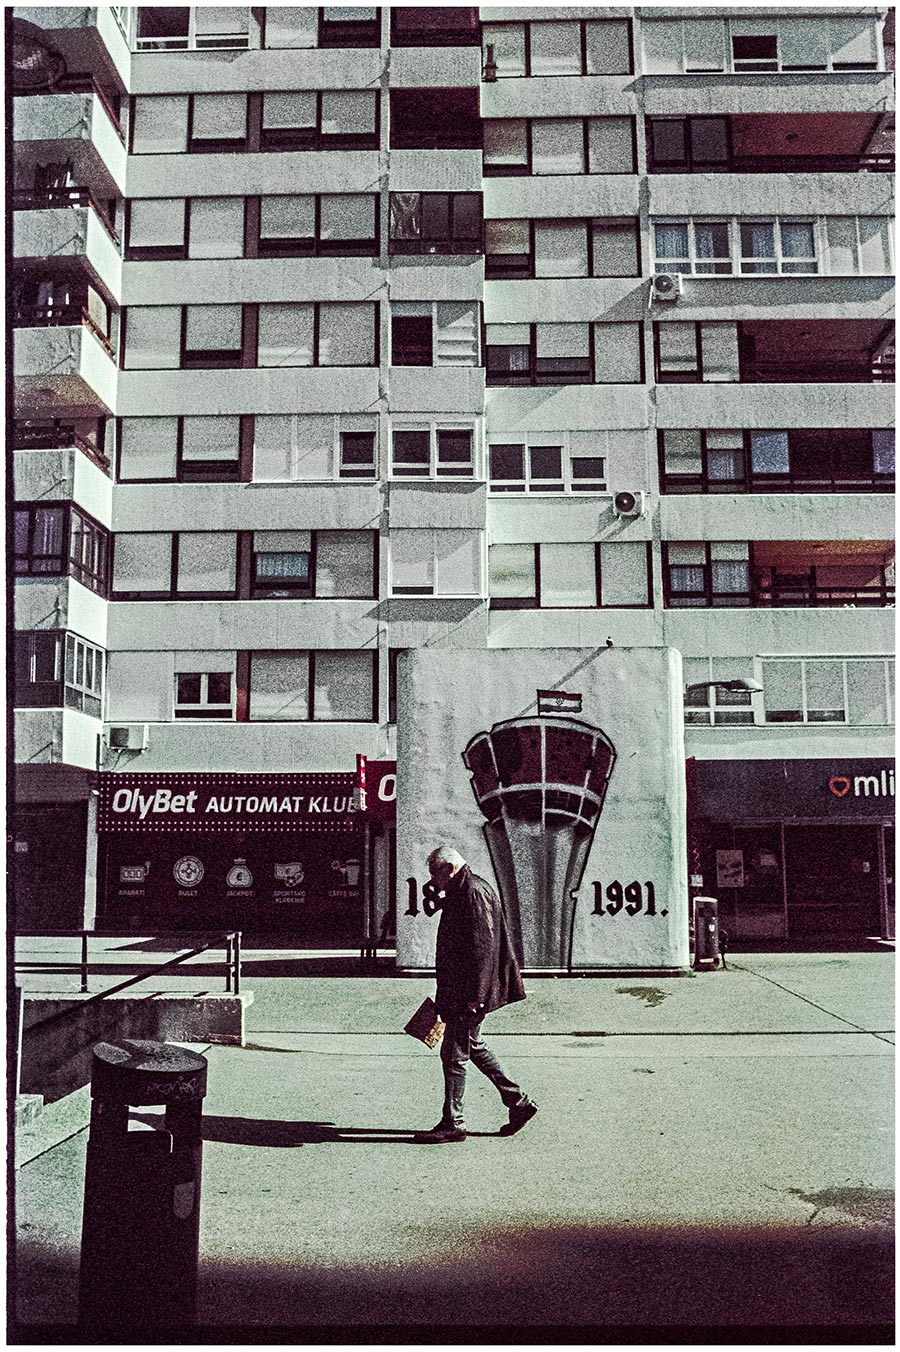 zagreb-brutalismus-mamutica13-analogefotografie-antjekroeger